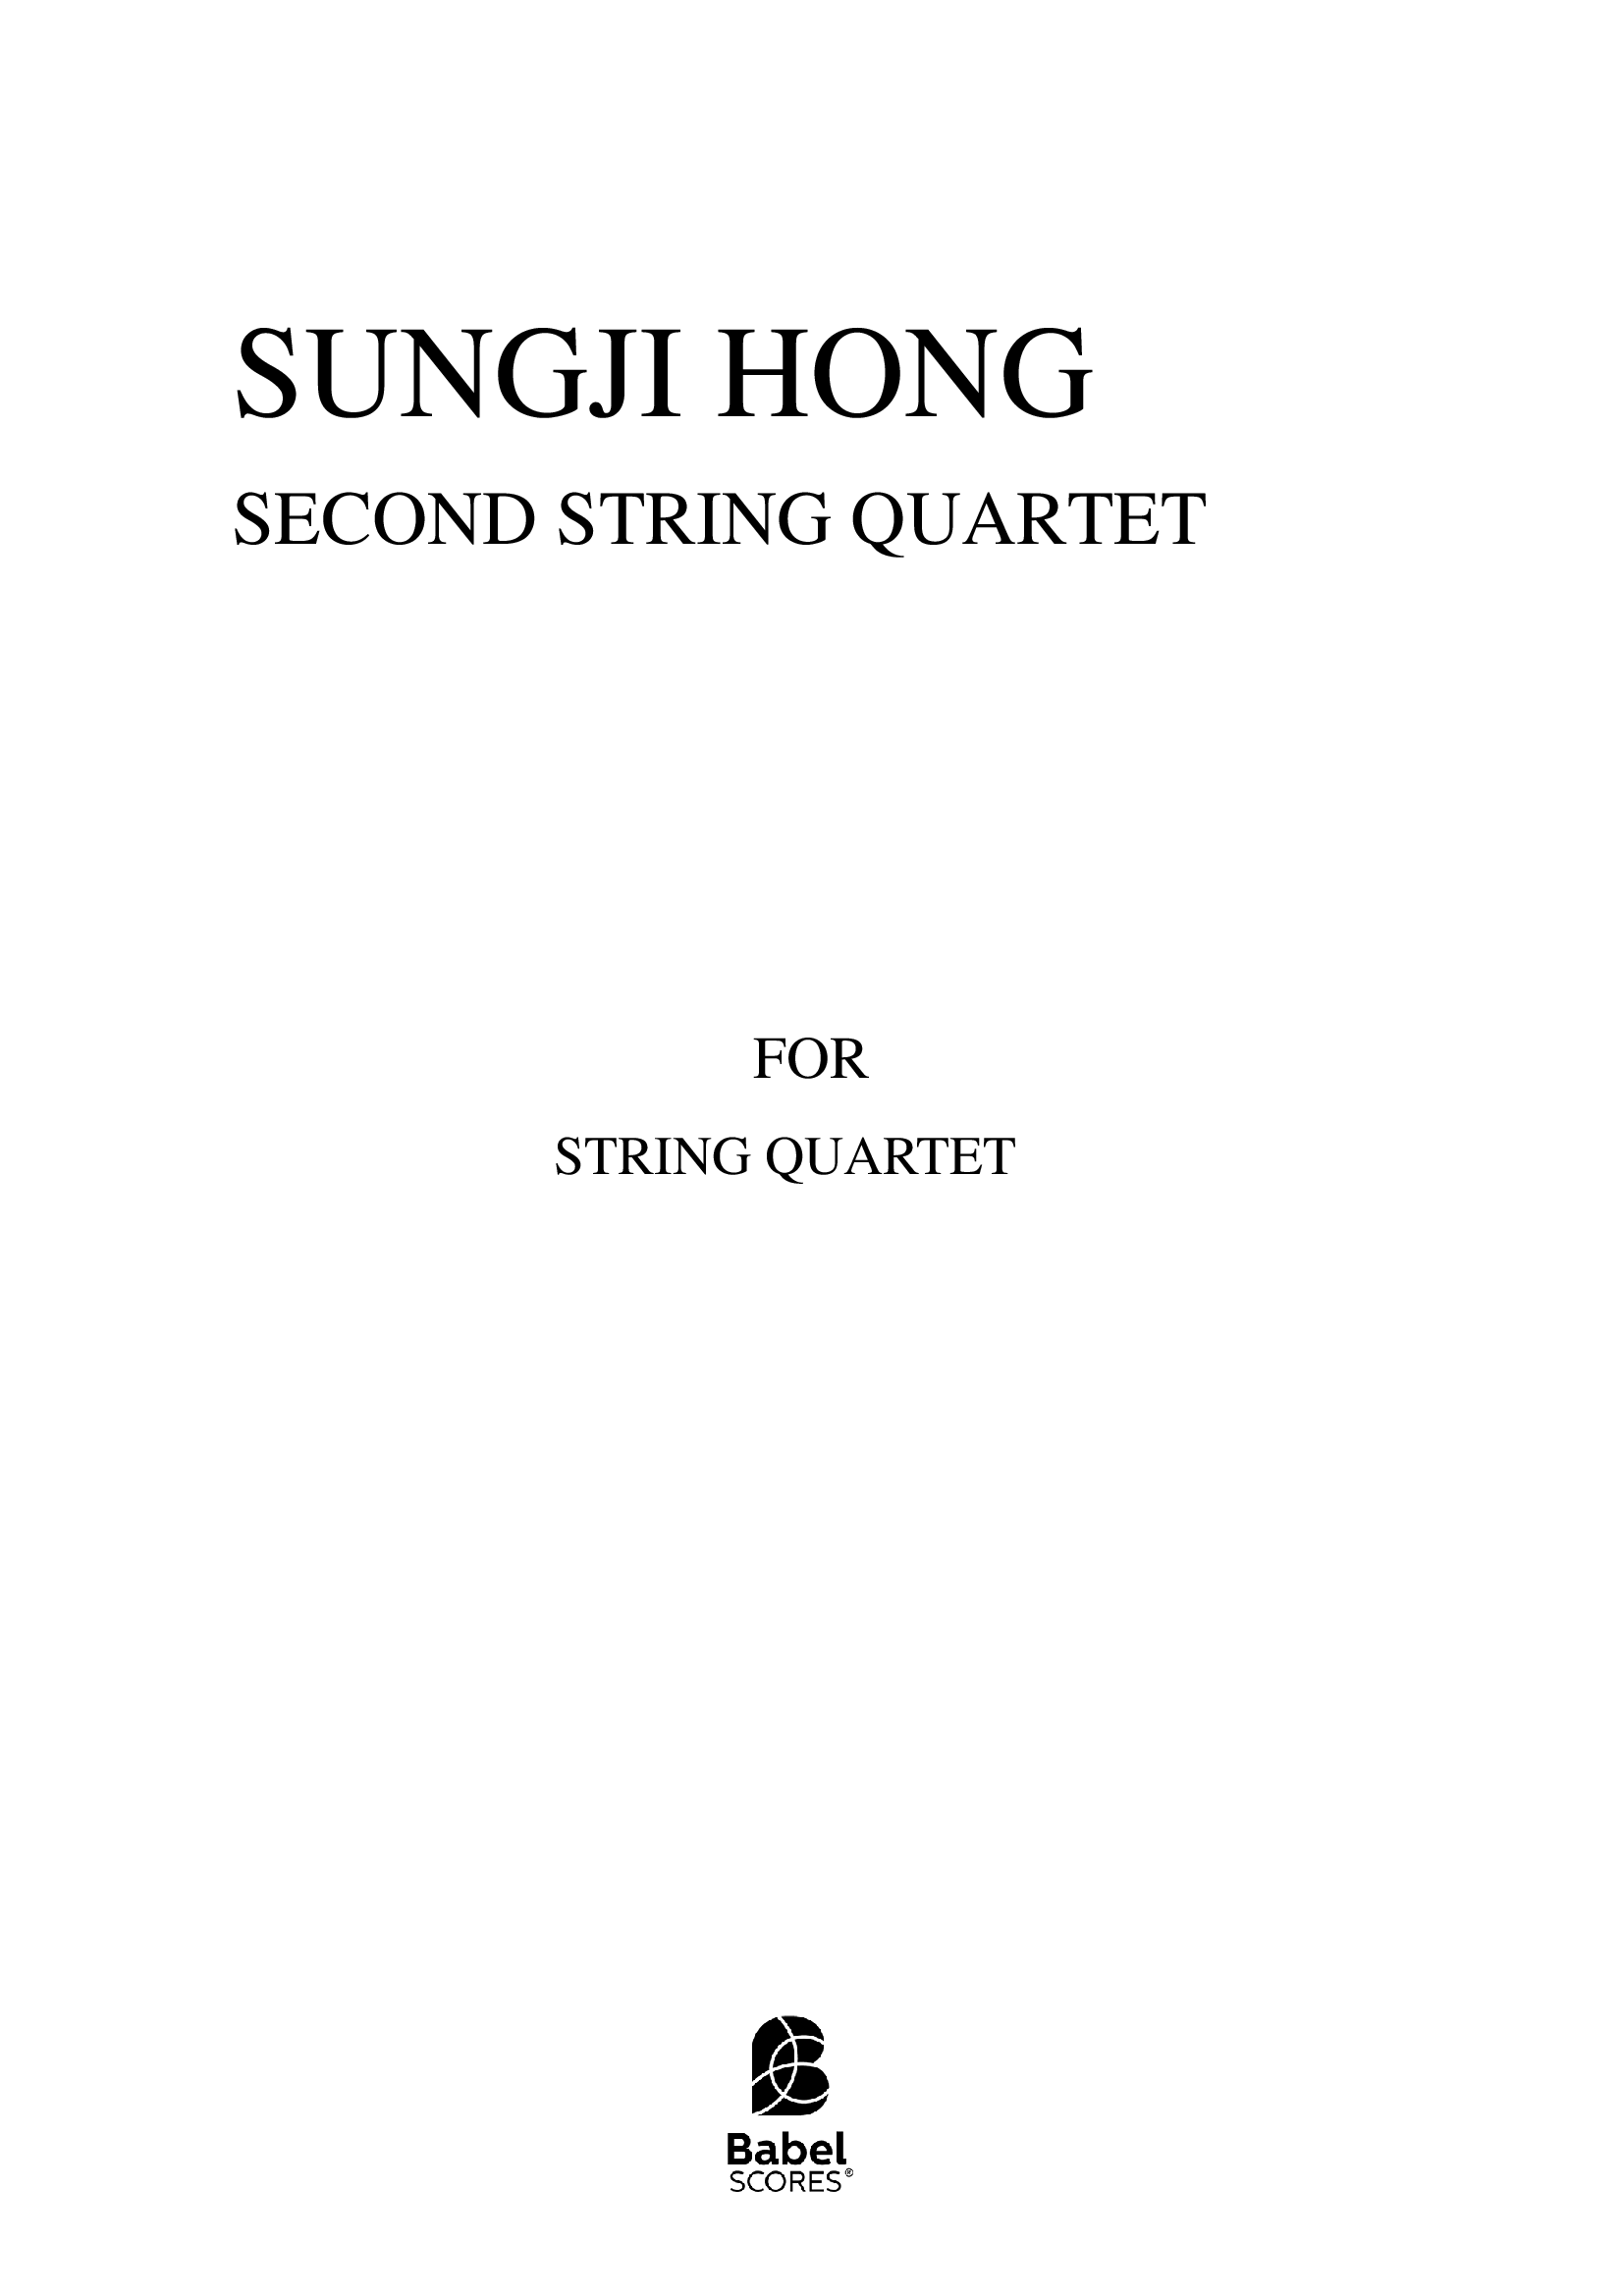 string_quartet_no2_fullscore A4 z 2 1 709